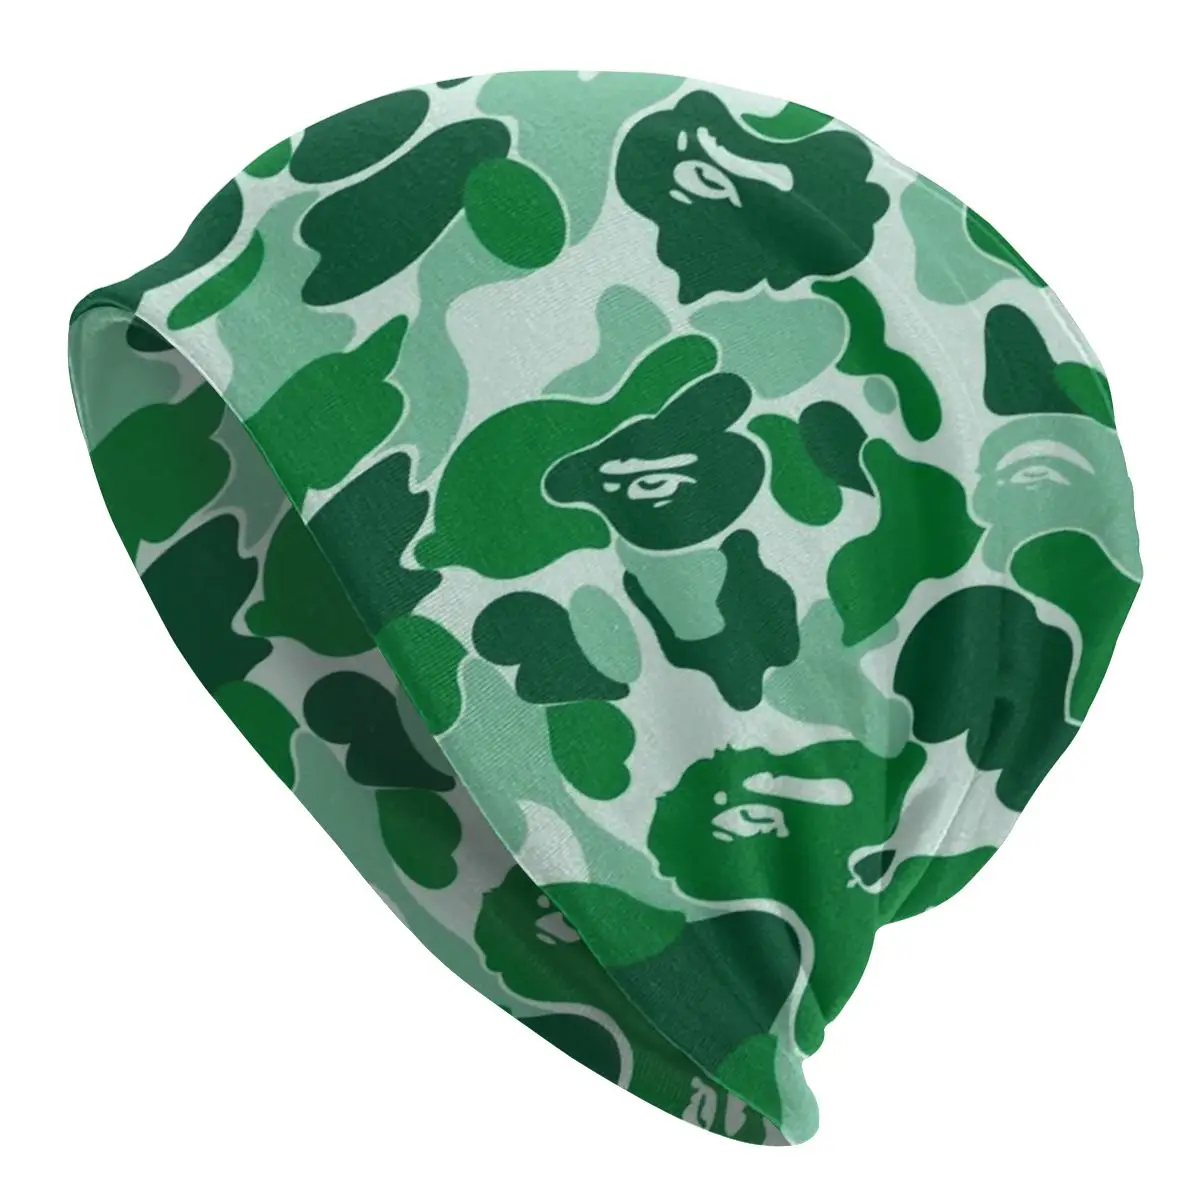 

Custom Green Army Camo Camouflage Slouchy Beanie Hat Men Women Design Pattern Cool Knitting Skullies Beanies Cap for Outdoor Ski